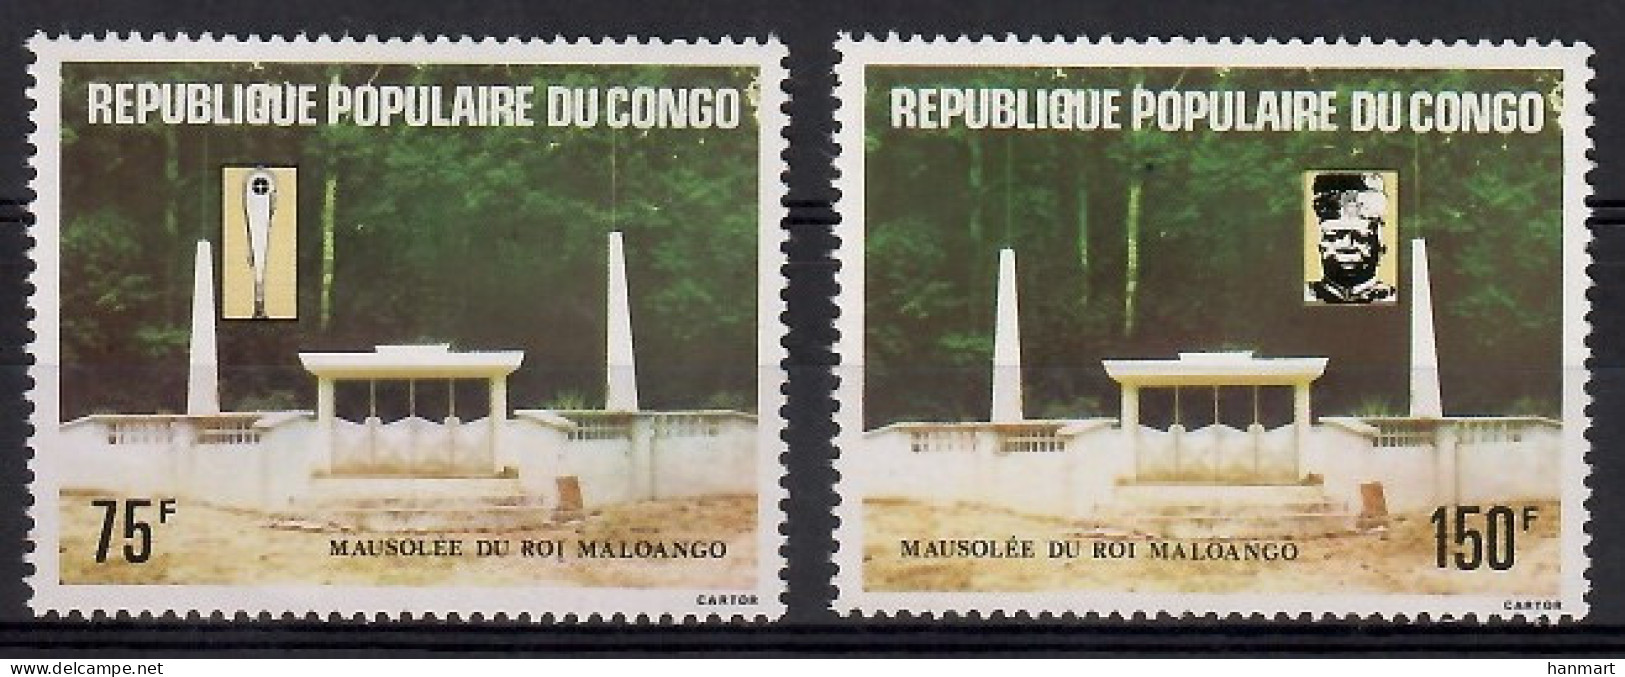 Congo, Republic (Brazzaville) 1981 Mi 825-826 MNH  (ZS6 CNG825-826) - Skulpturen